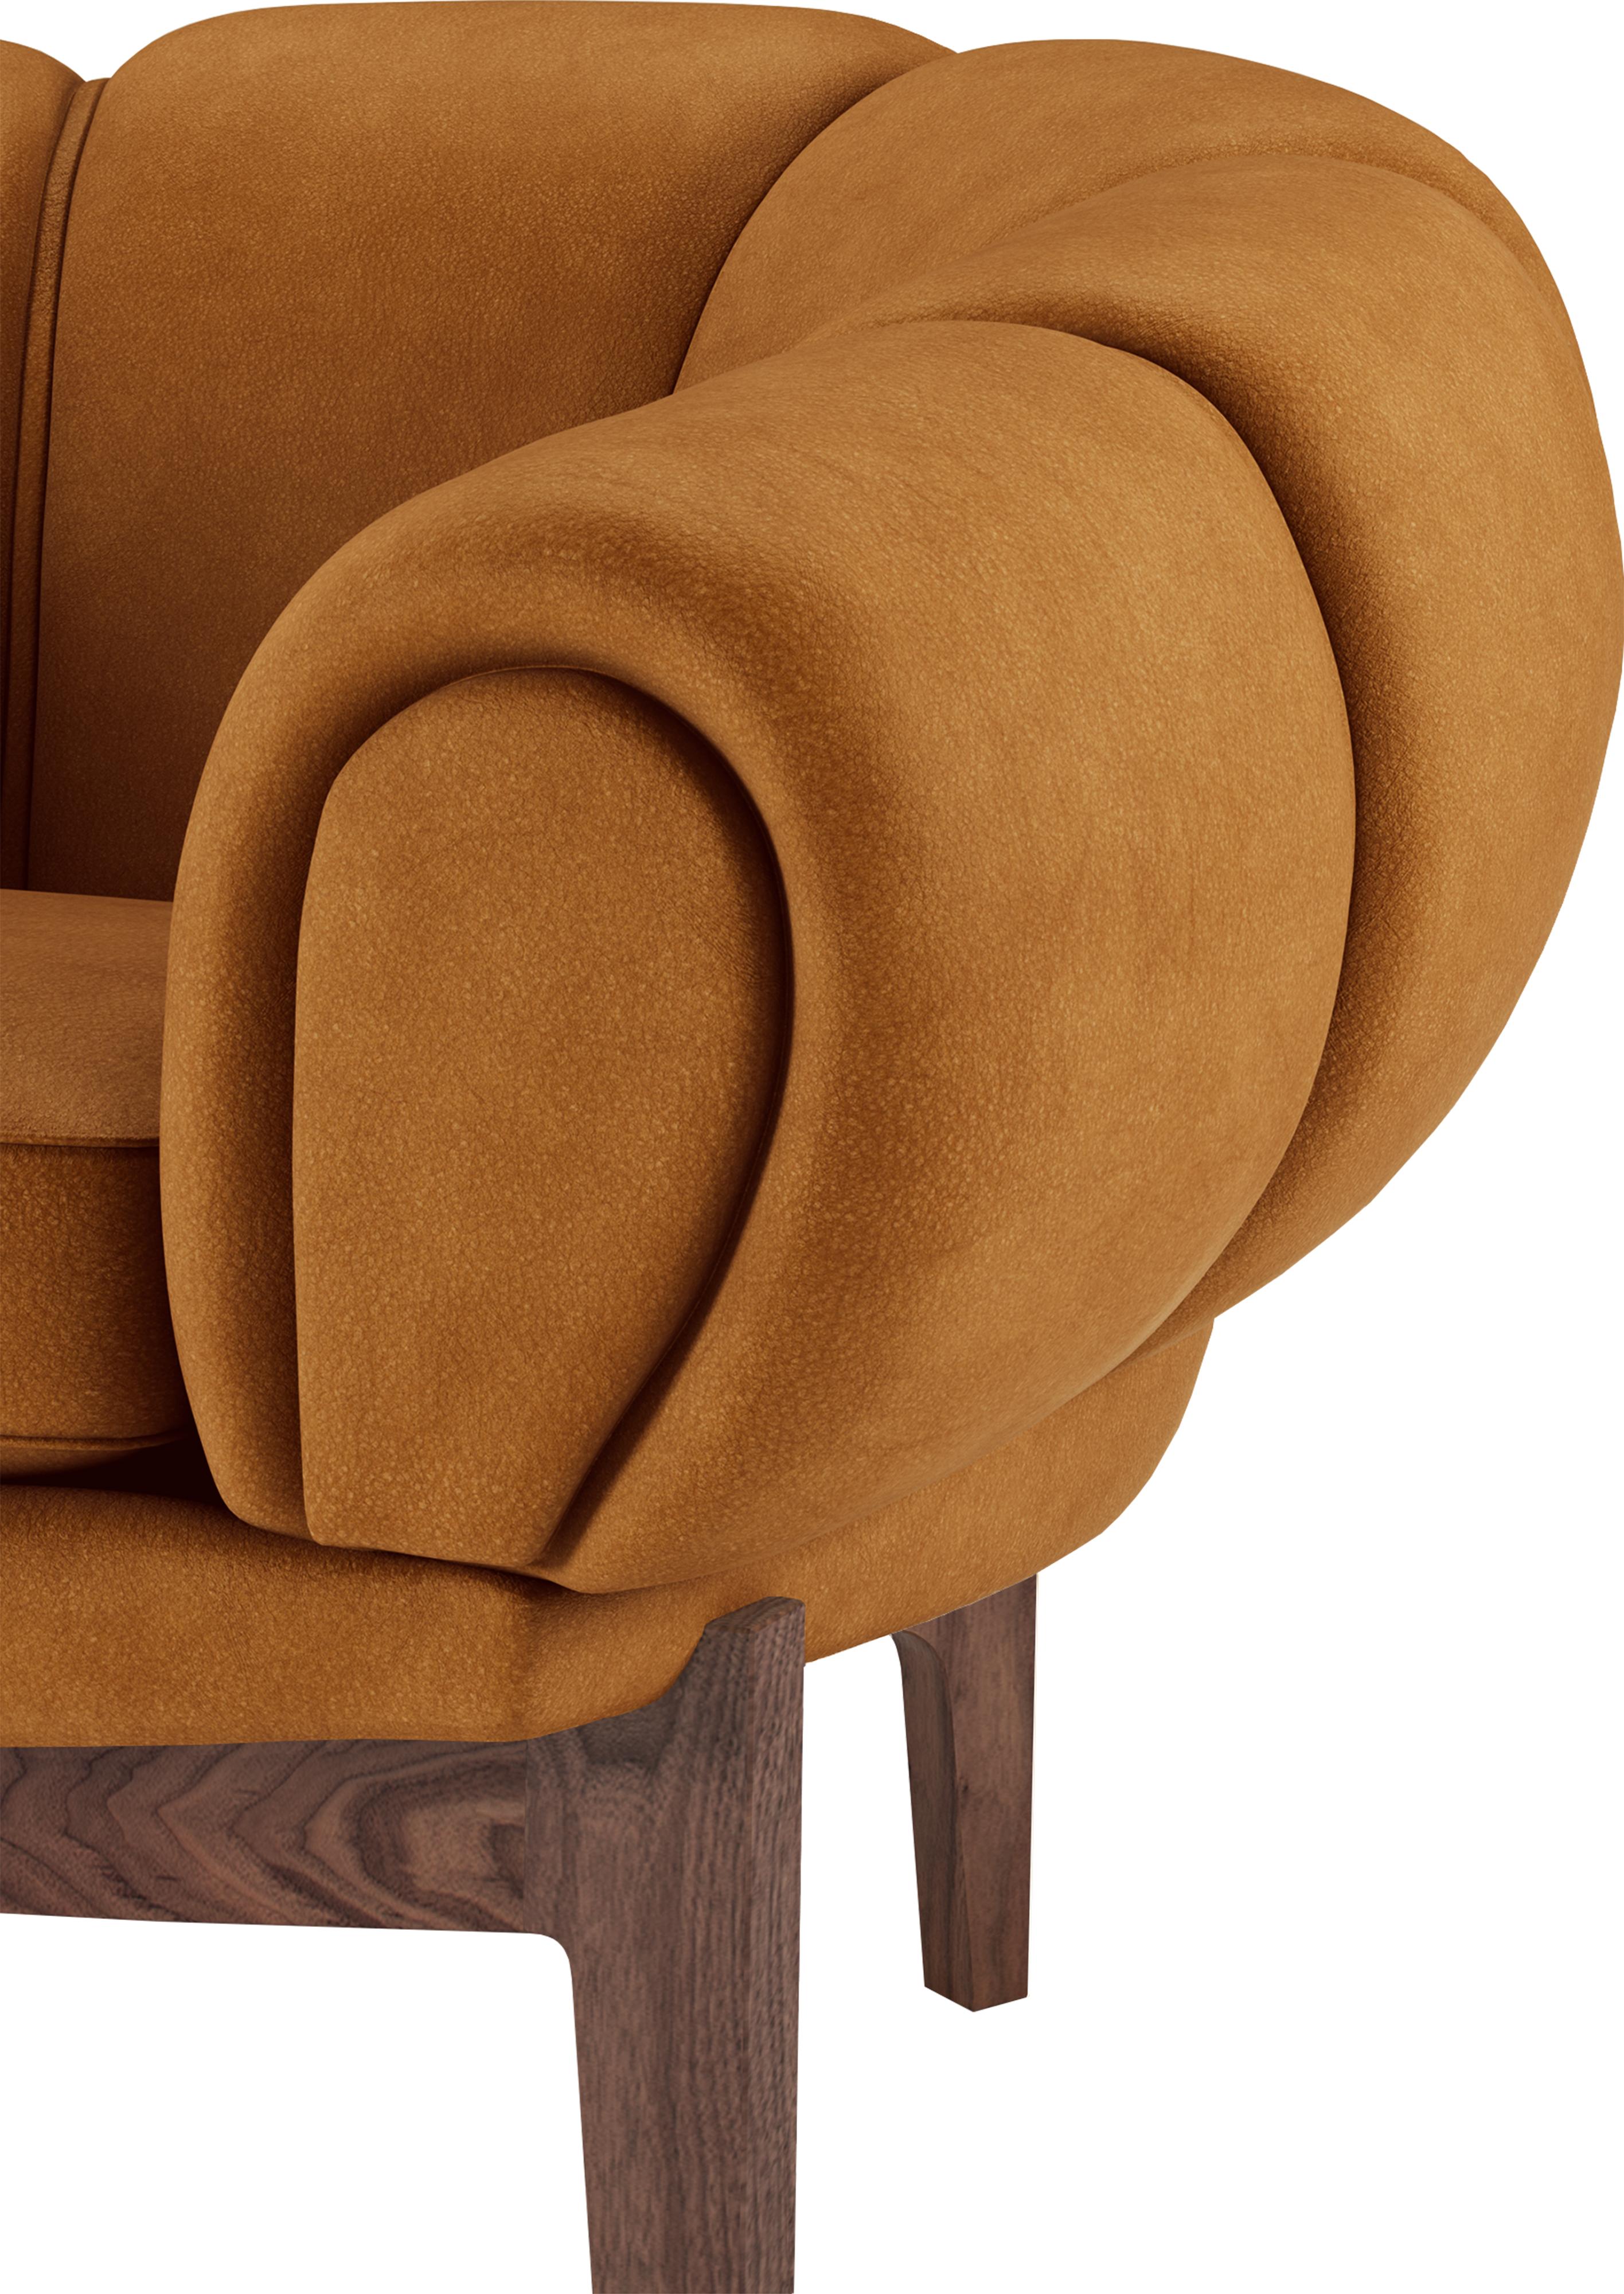 Leather 'Croissant' Sofa by Illum Wikkelsø for Gubi with Oak Legs For Sale 9